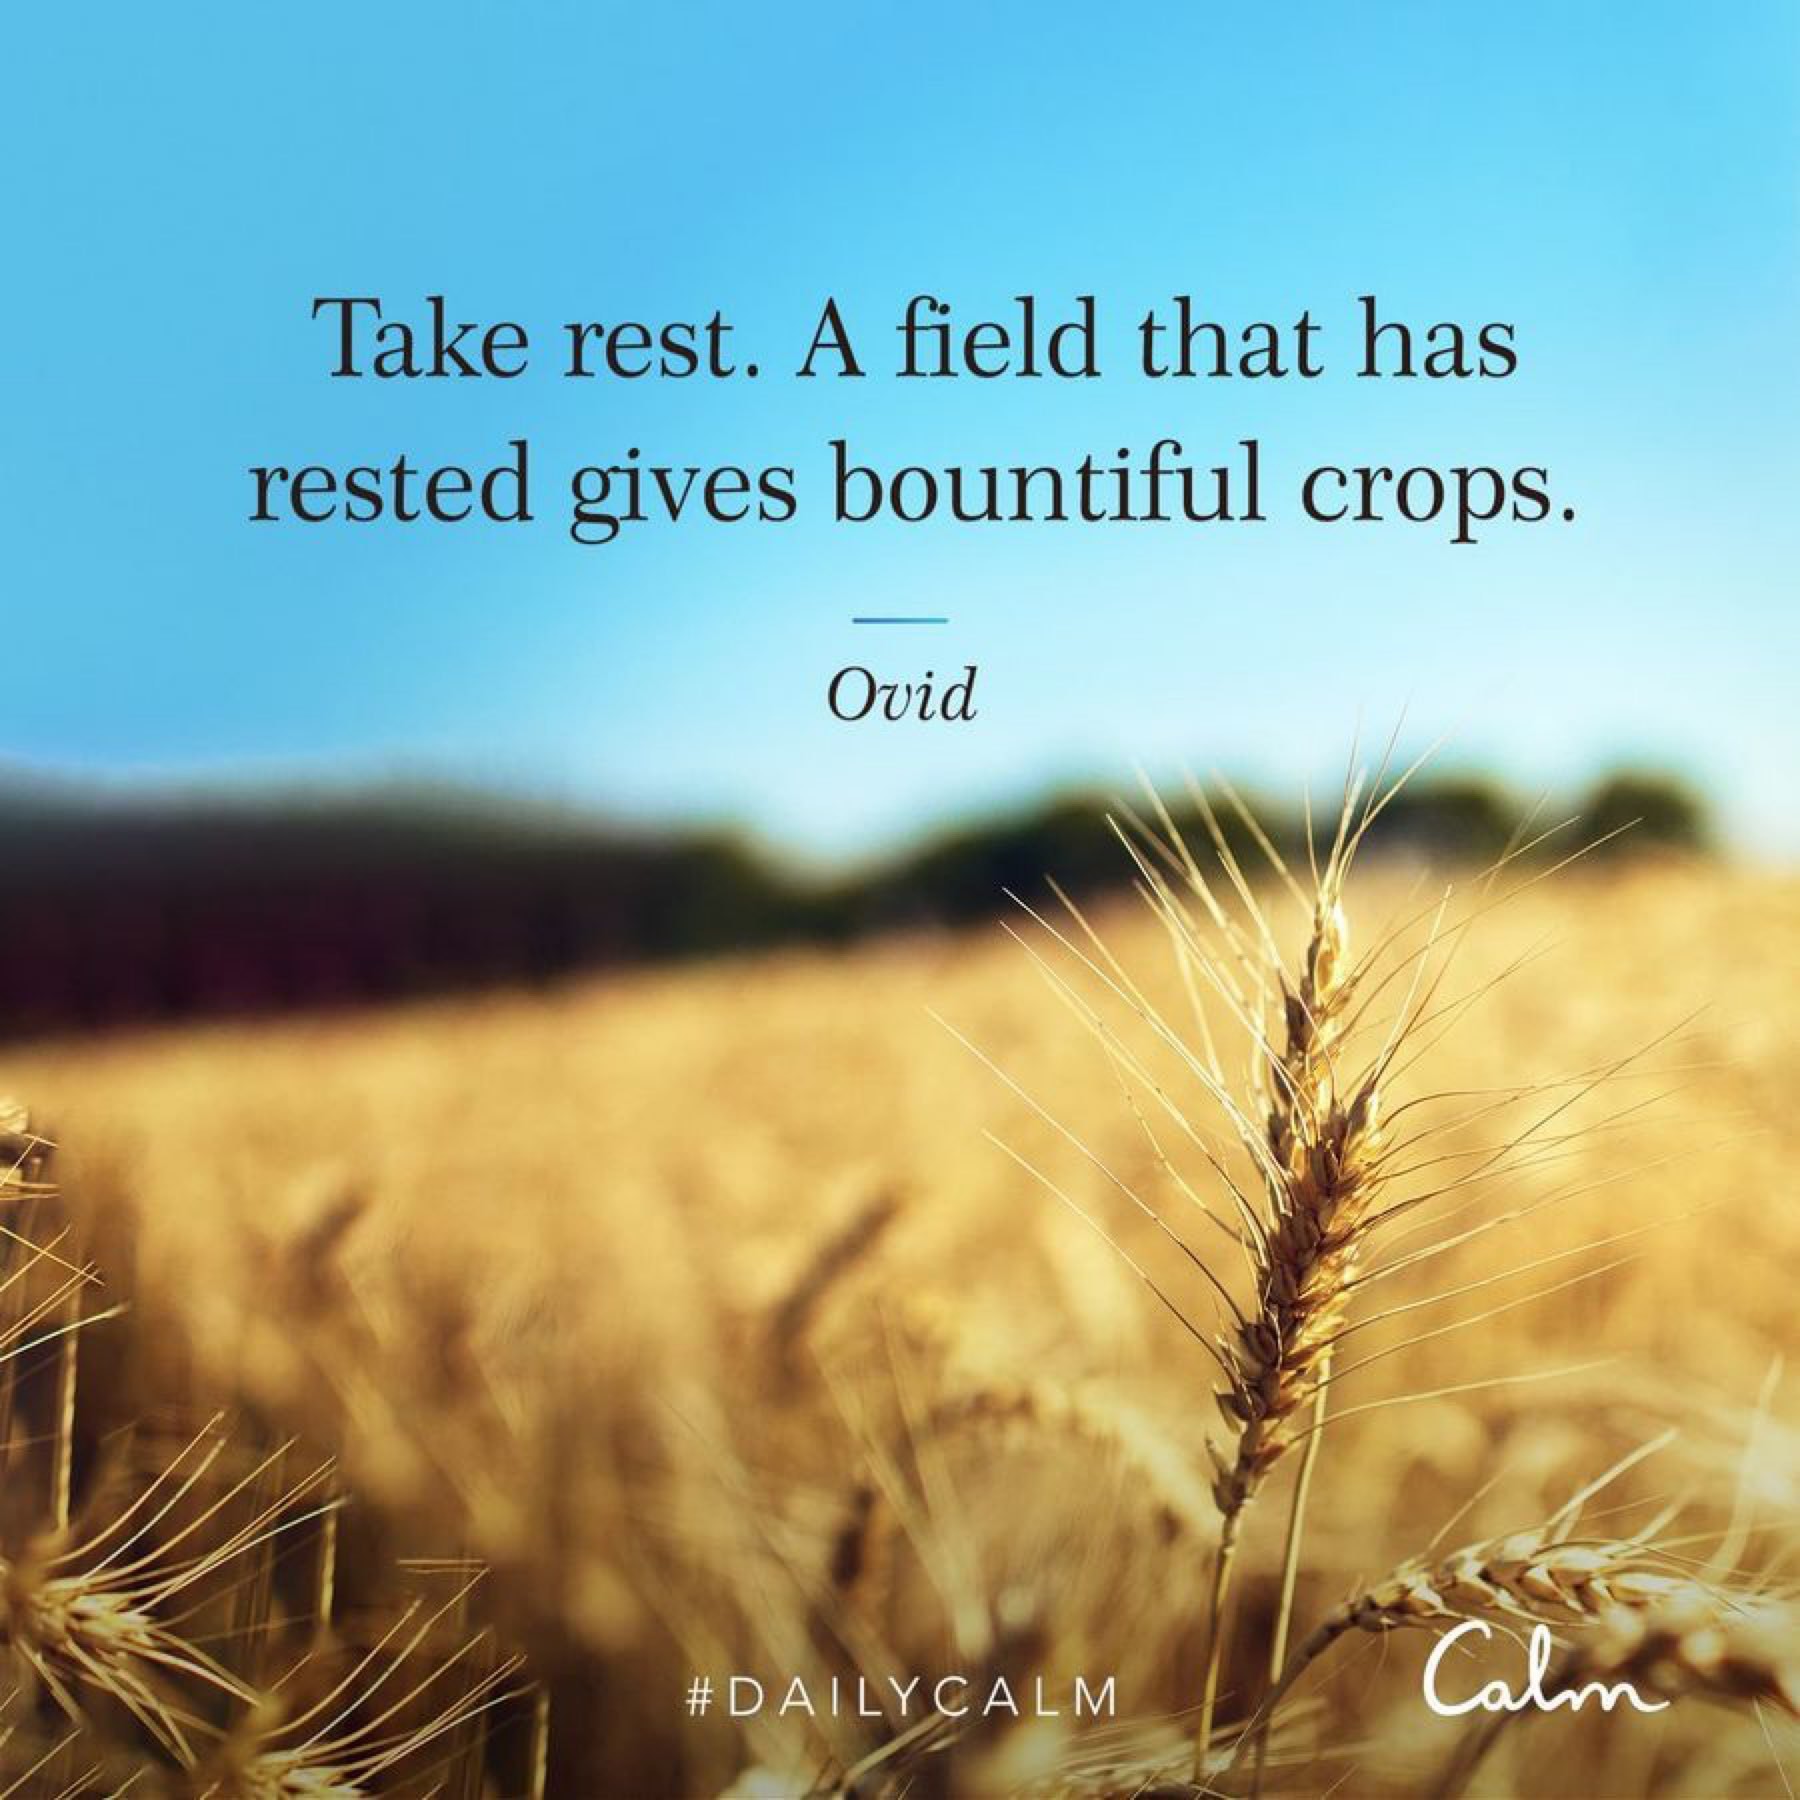 Take rest